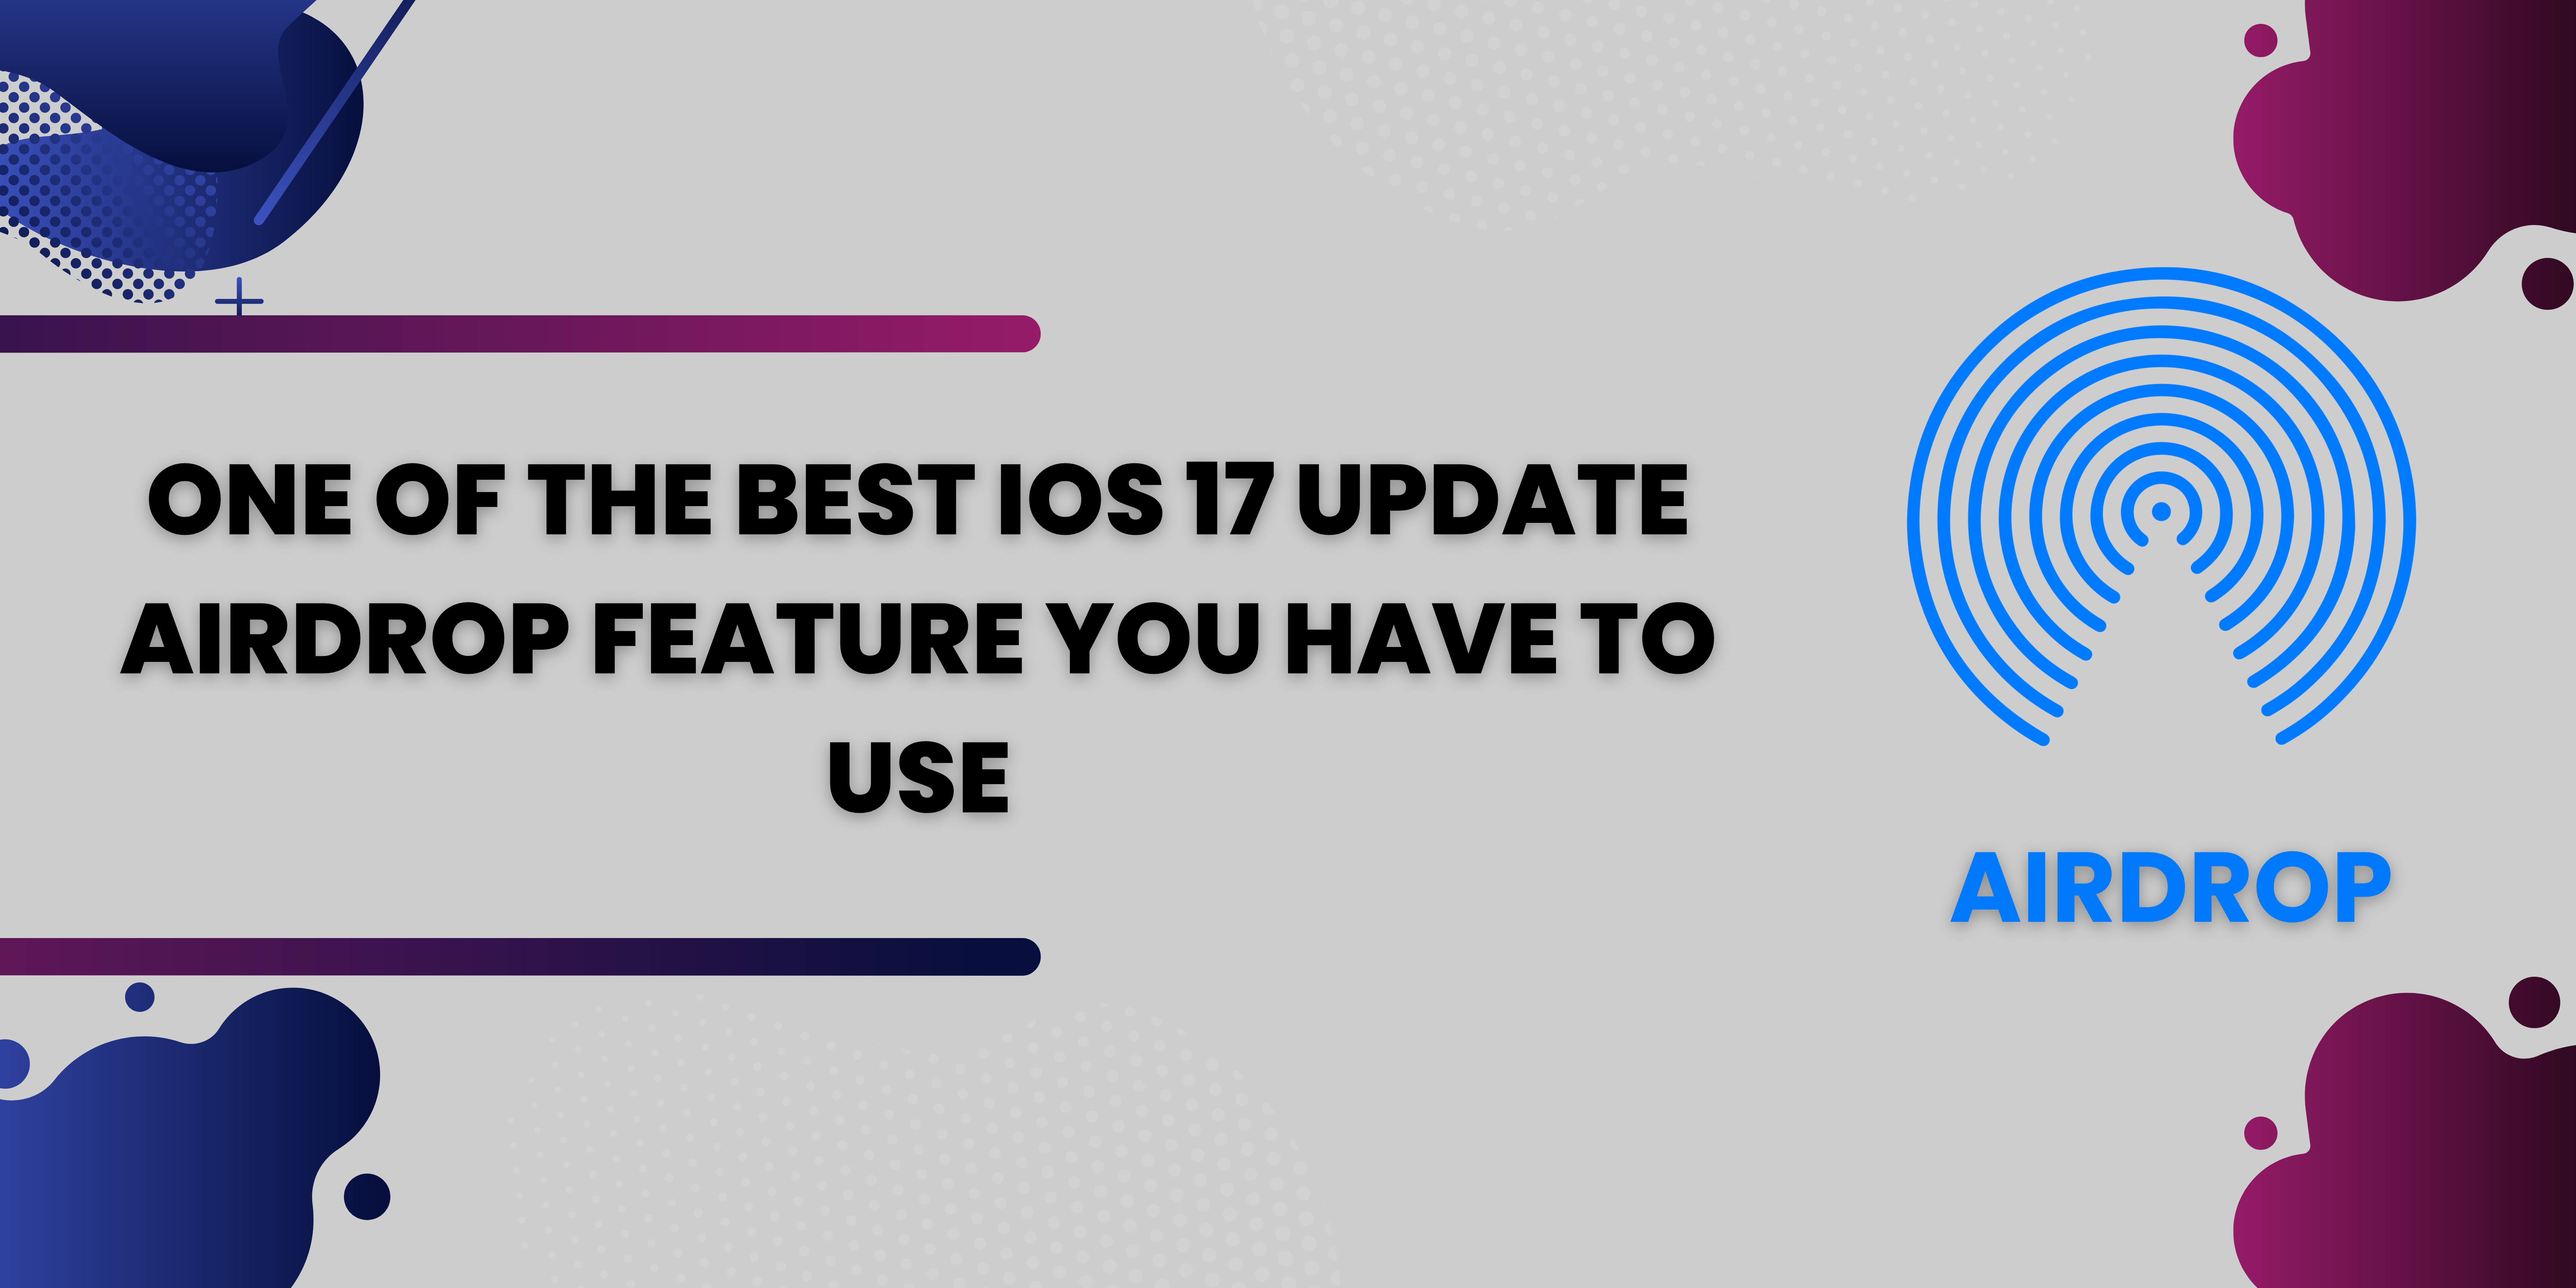 IOS 17 Update feature